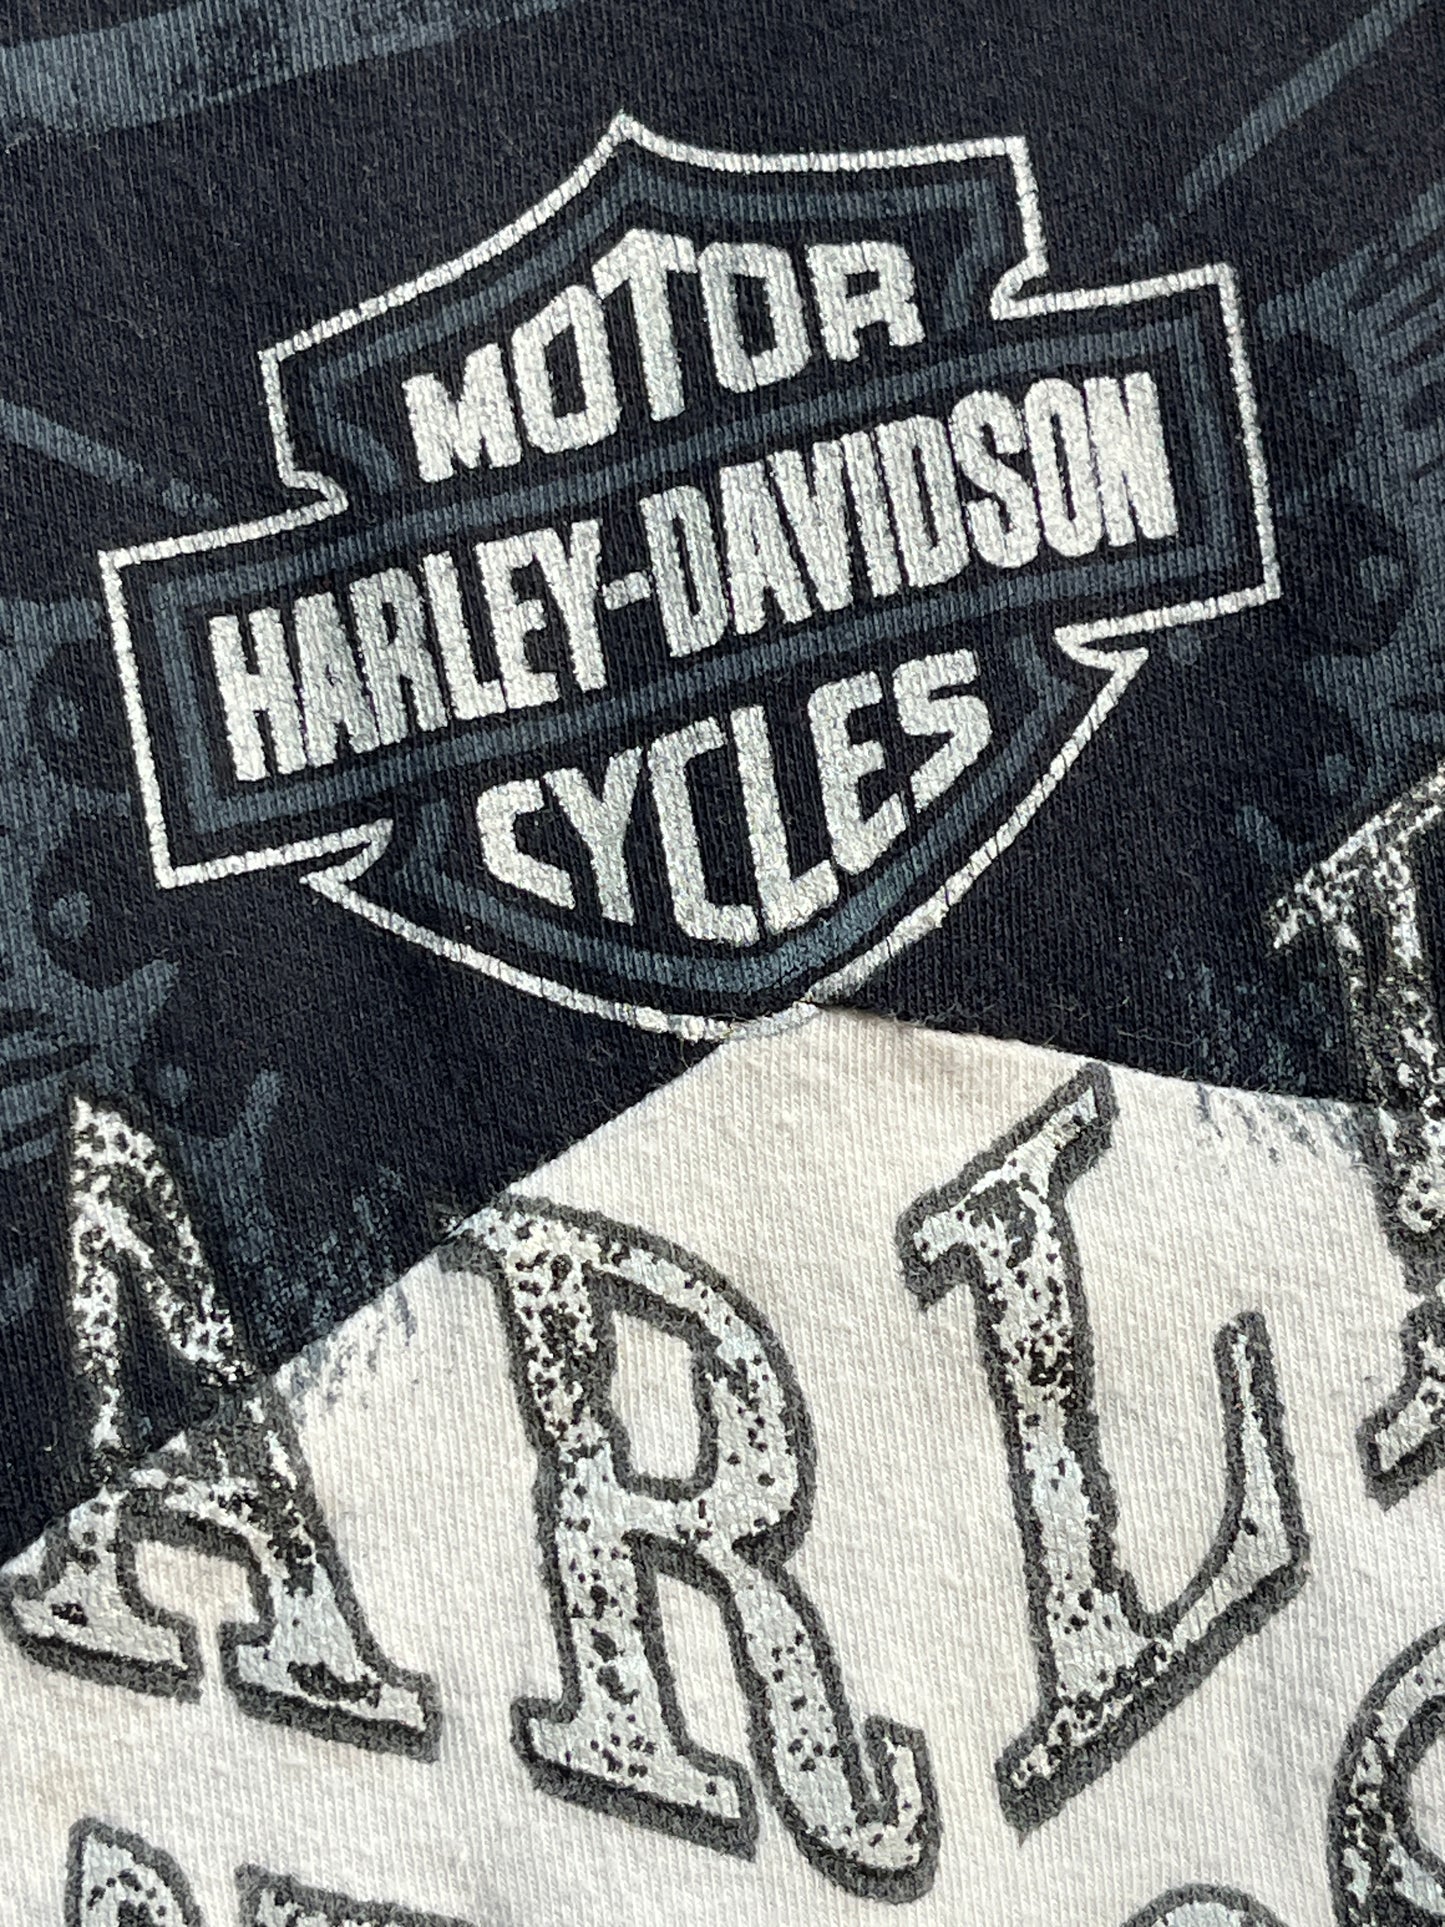 Vintage Harley Davidson Tank Top Shirt